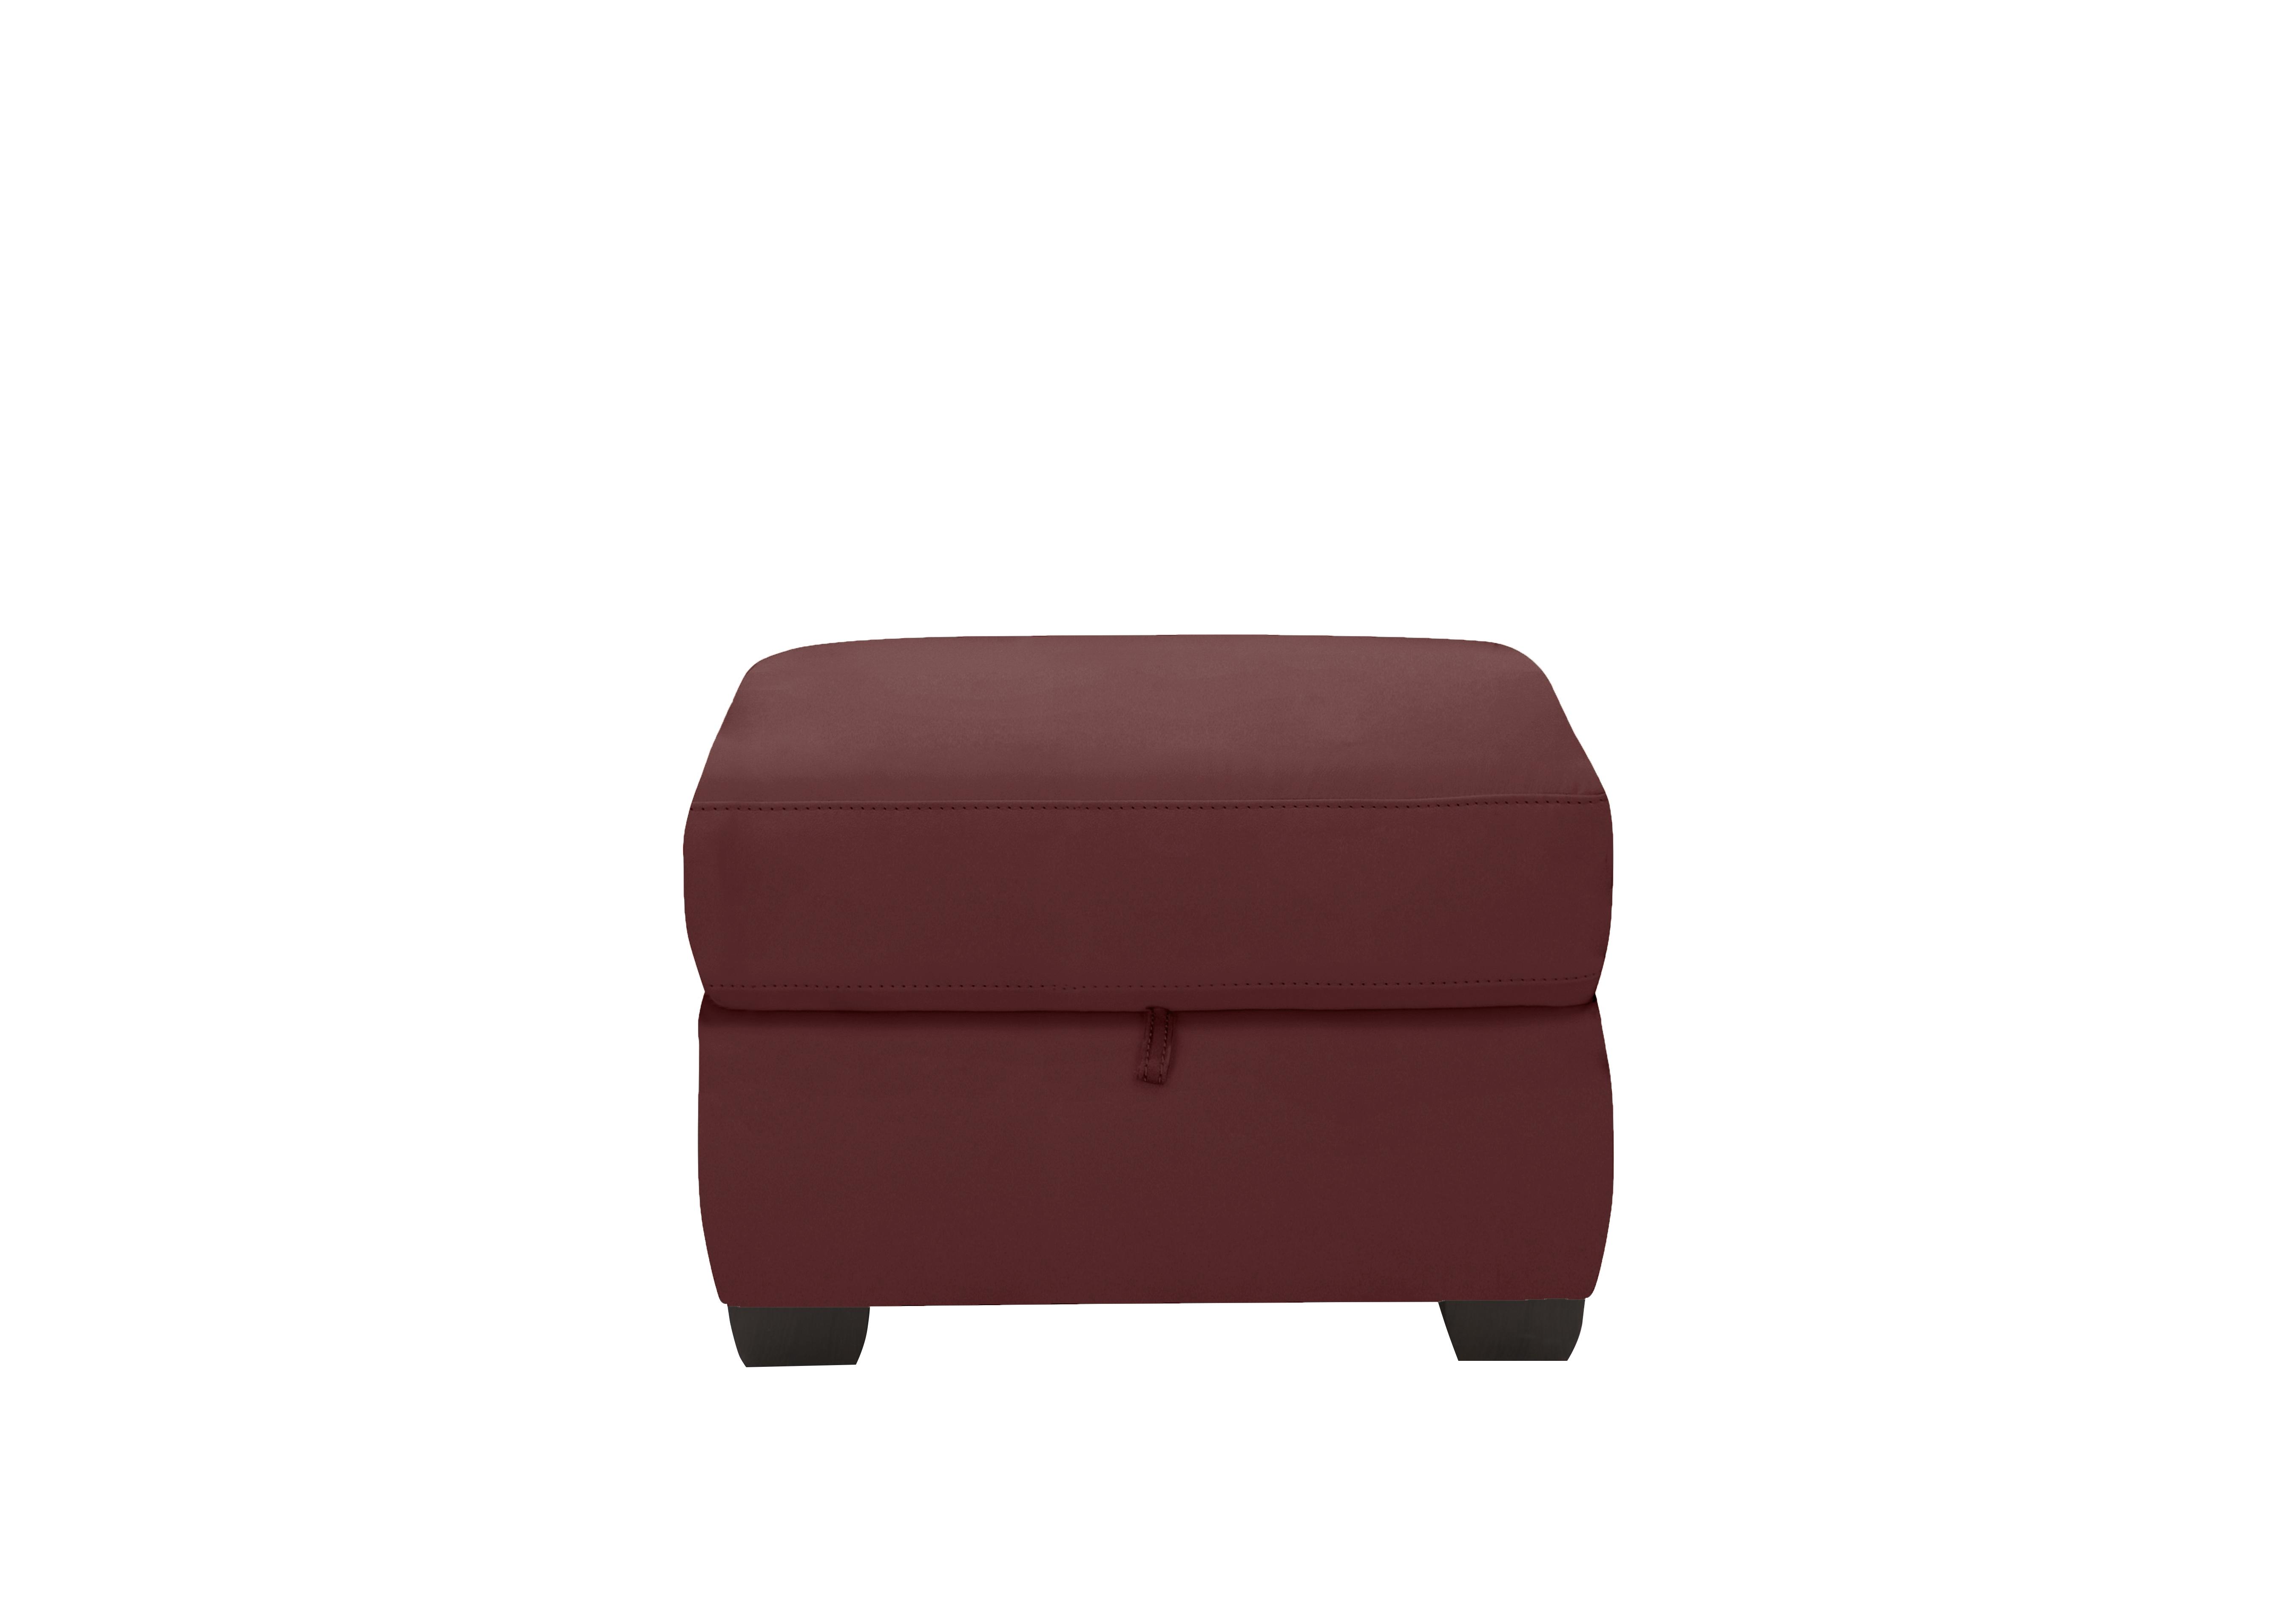 Optimus Leather Storage Footstool in Bv-035c Deep Red on Furniture Village